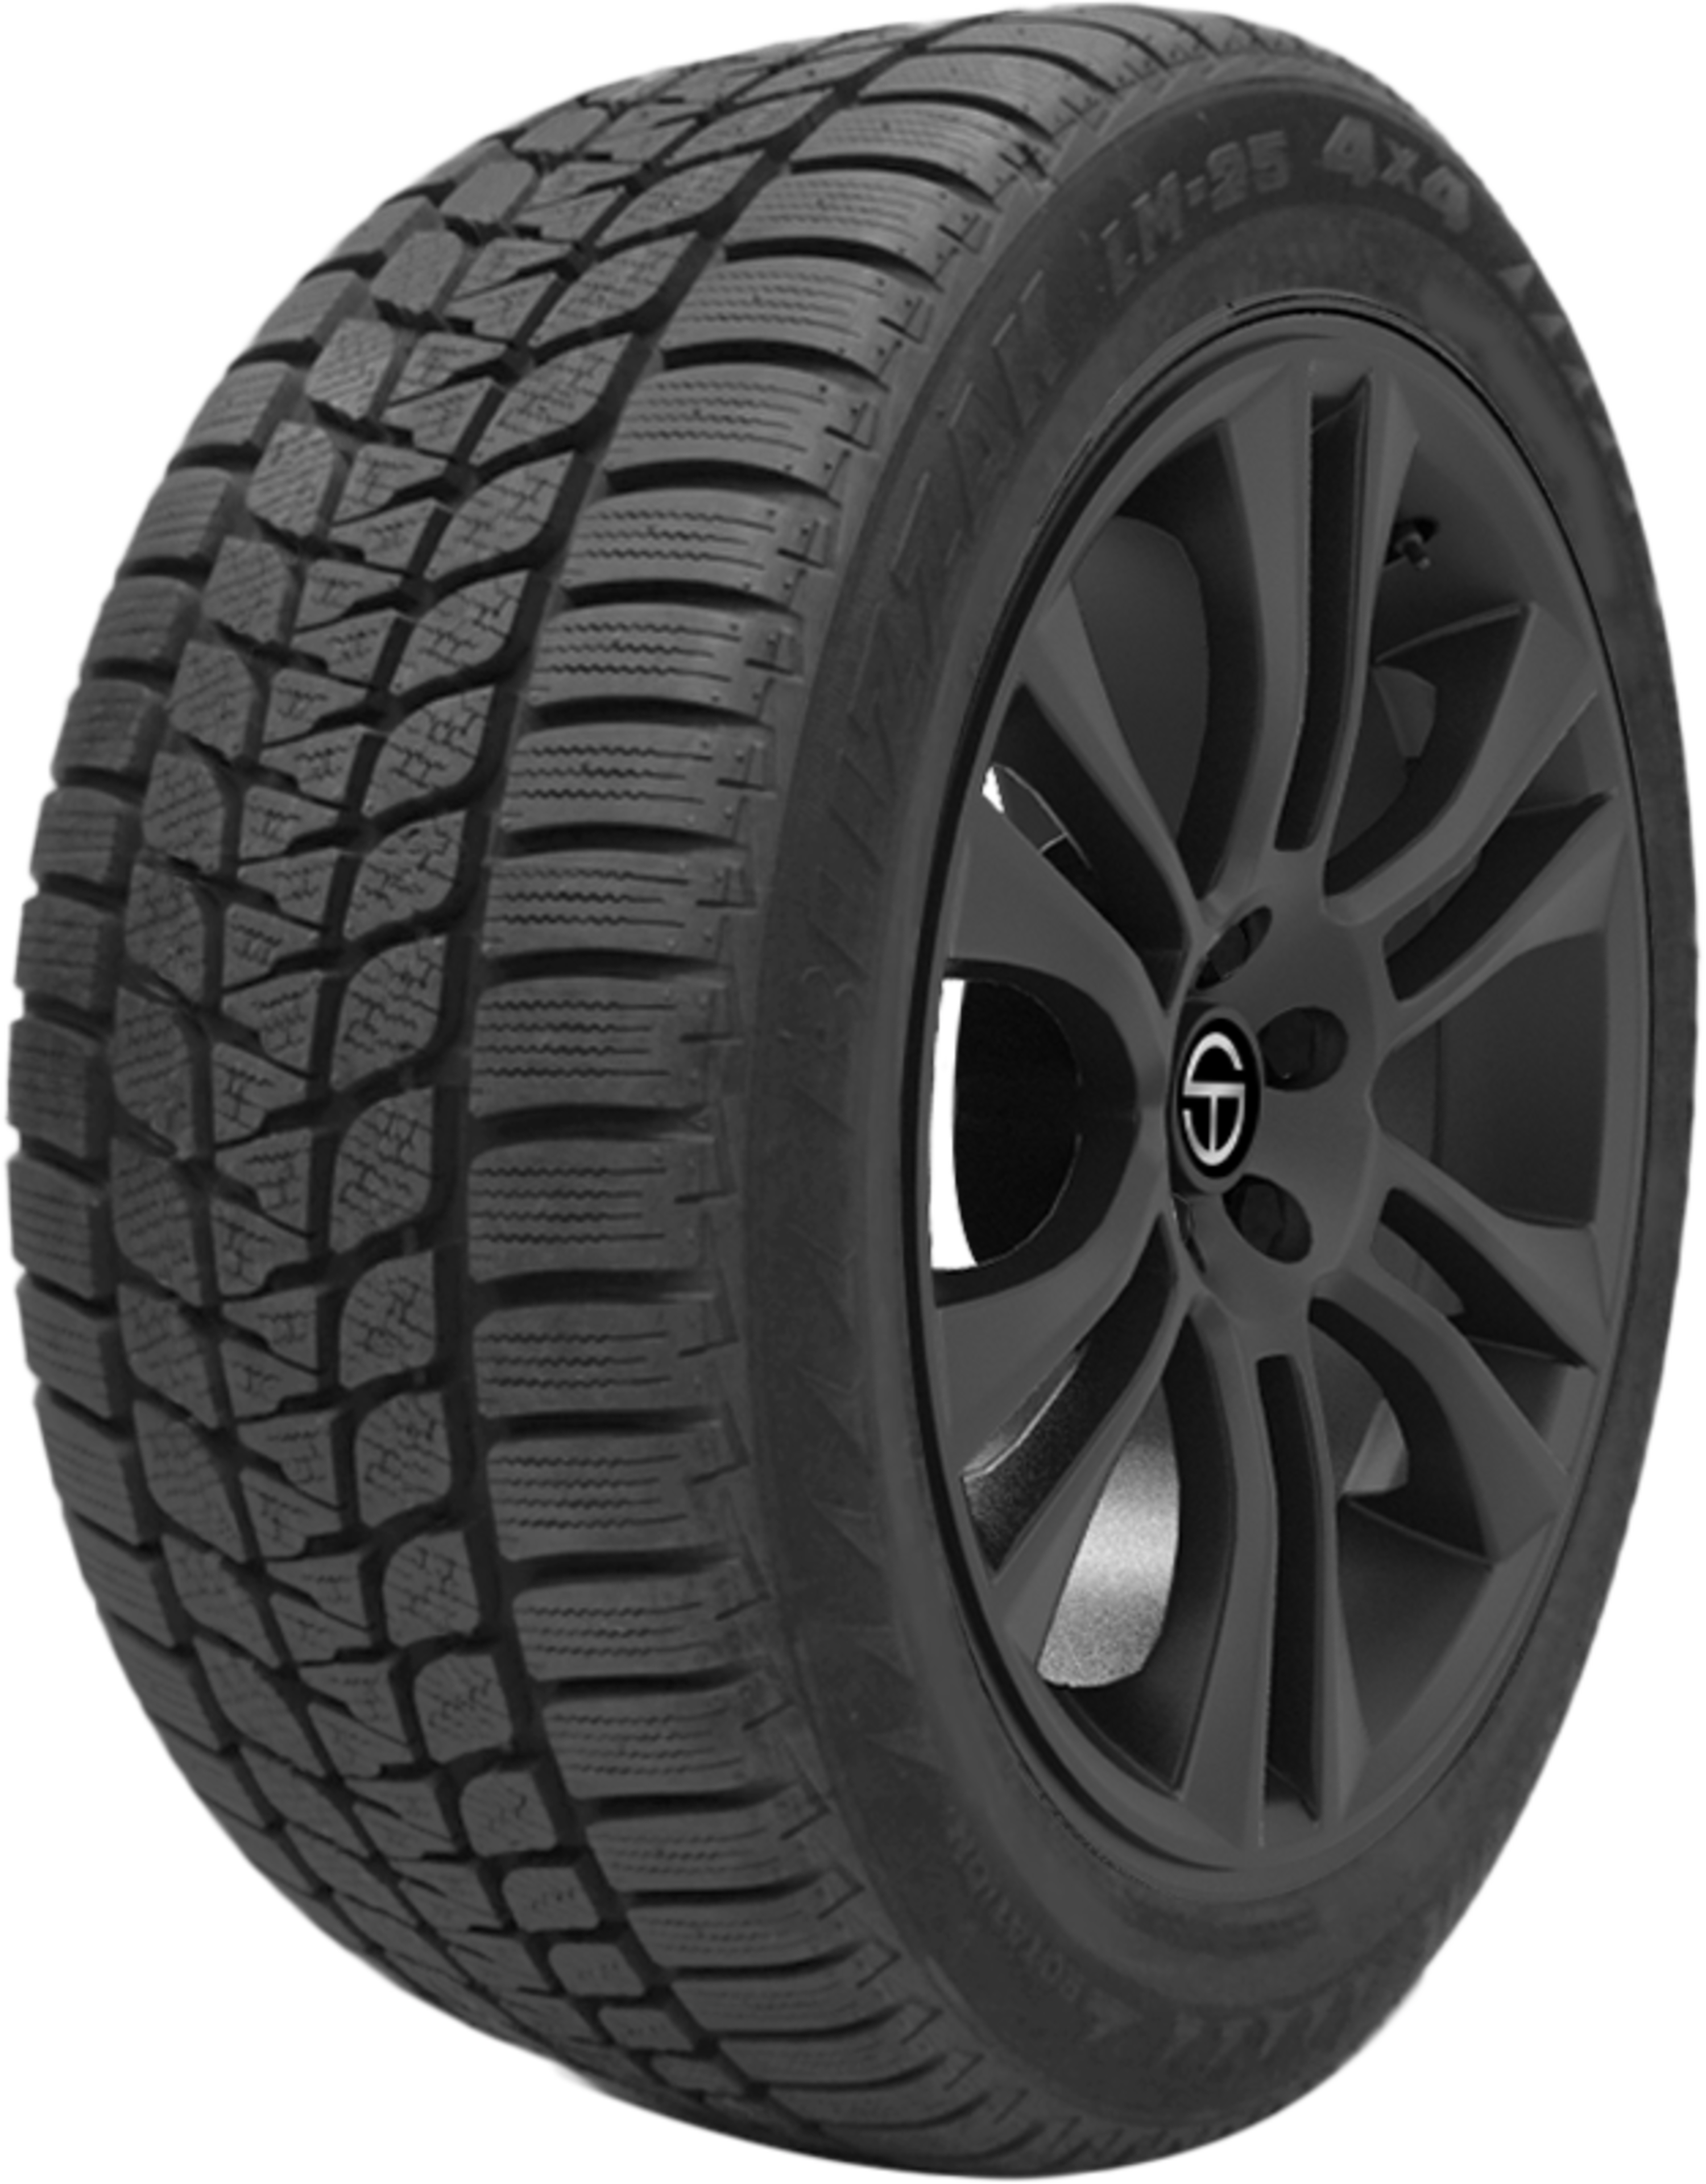 Buy Bridgestone Blizzak LM-25 4X4 SimpleTire Online | Tires MOE